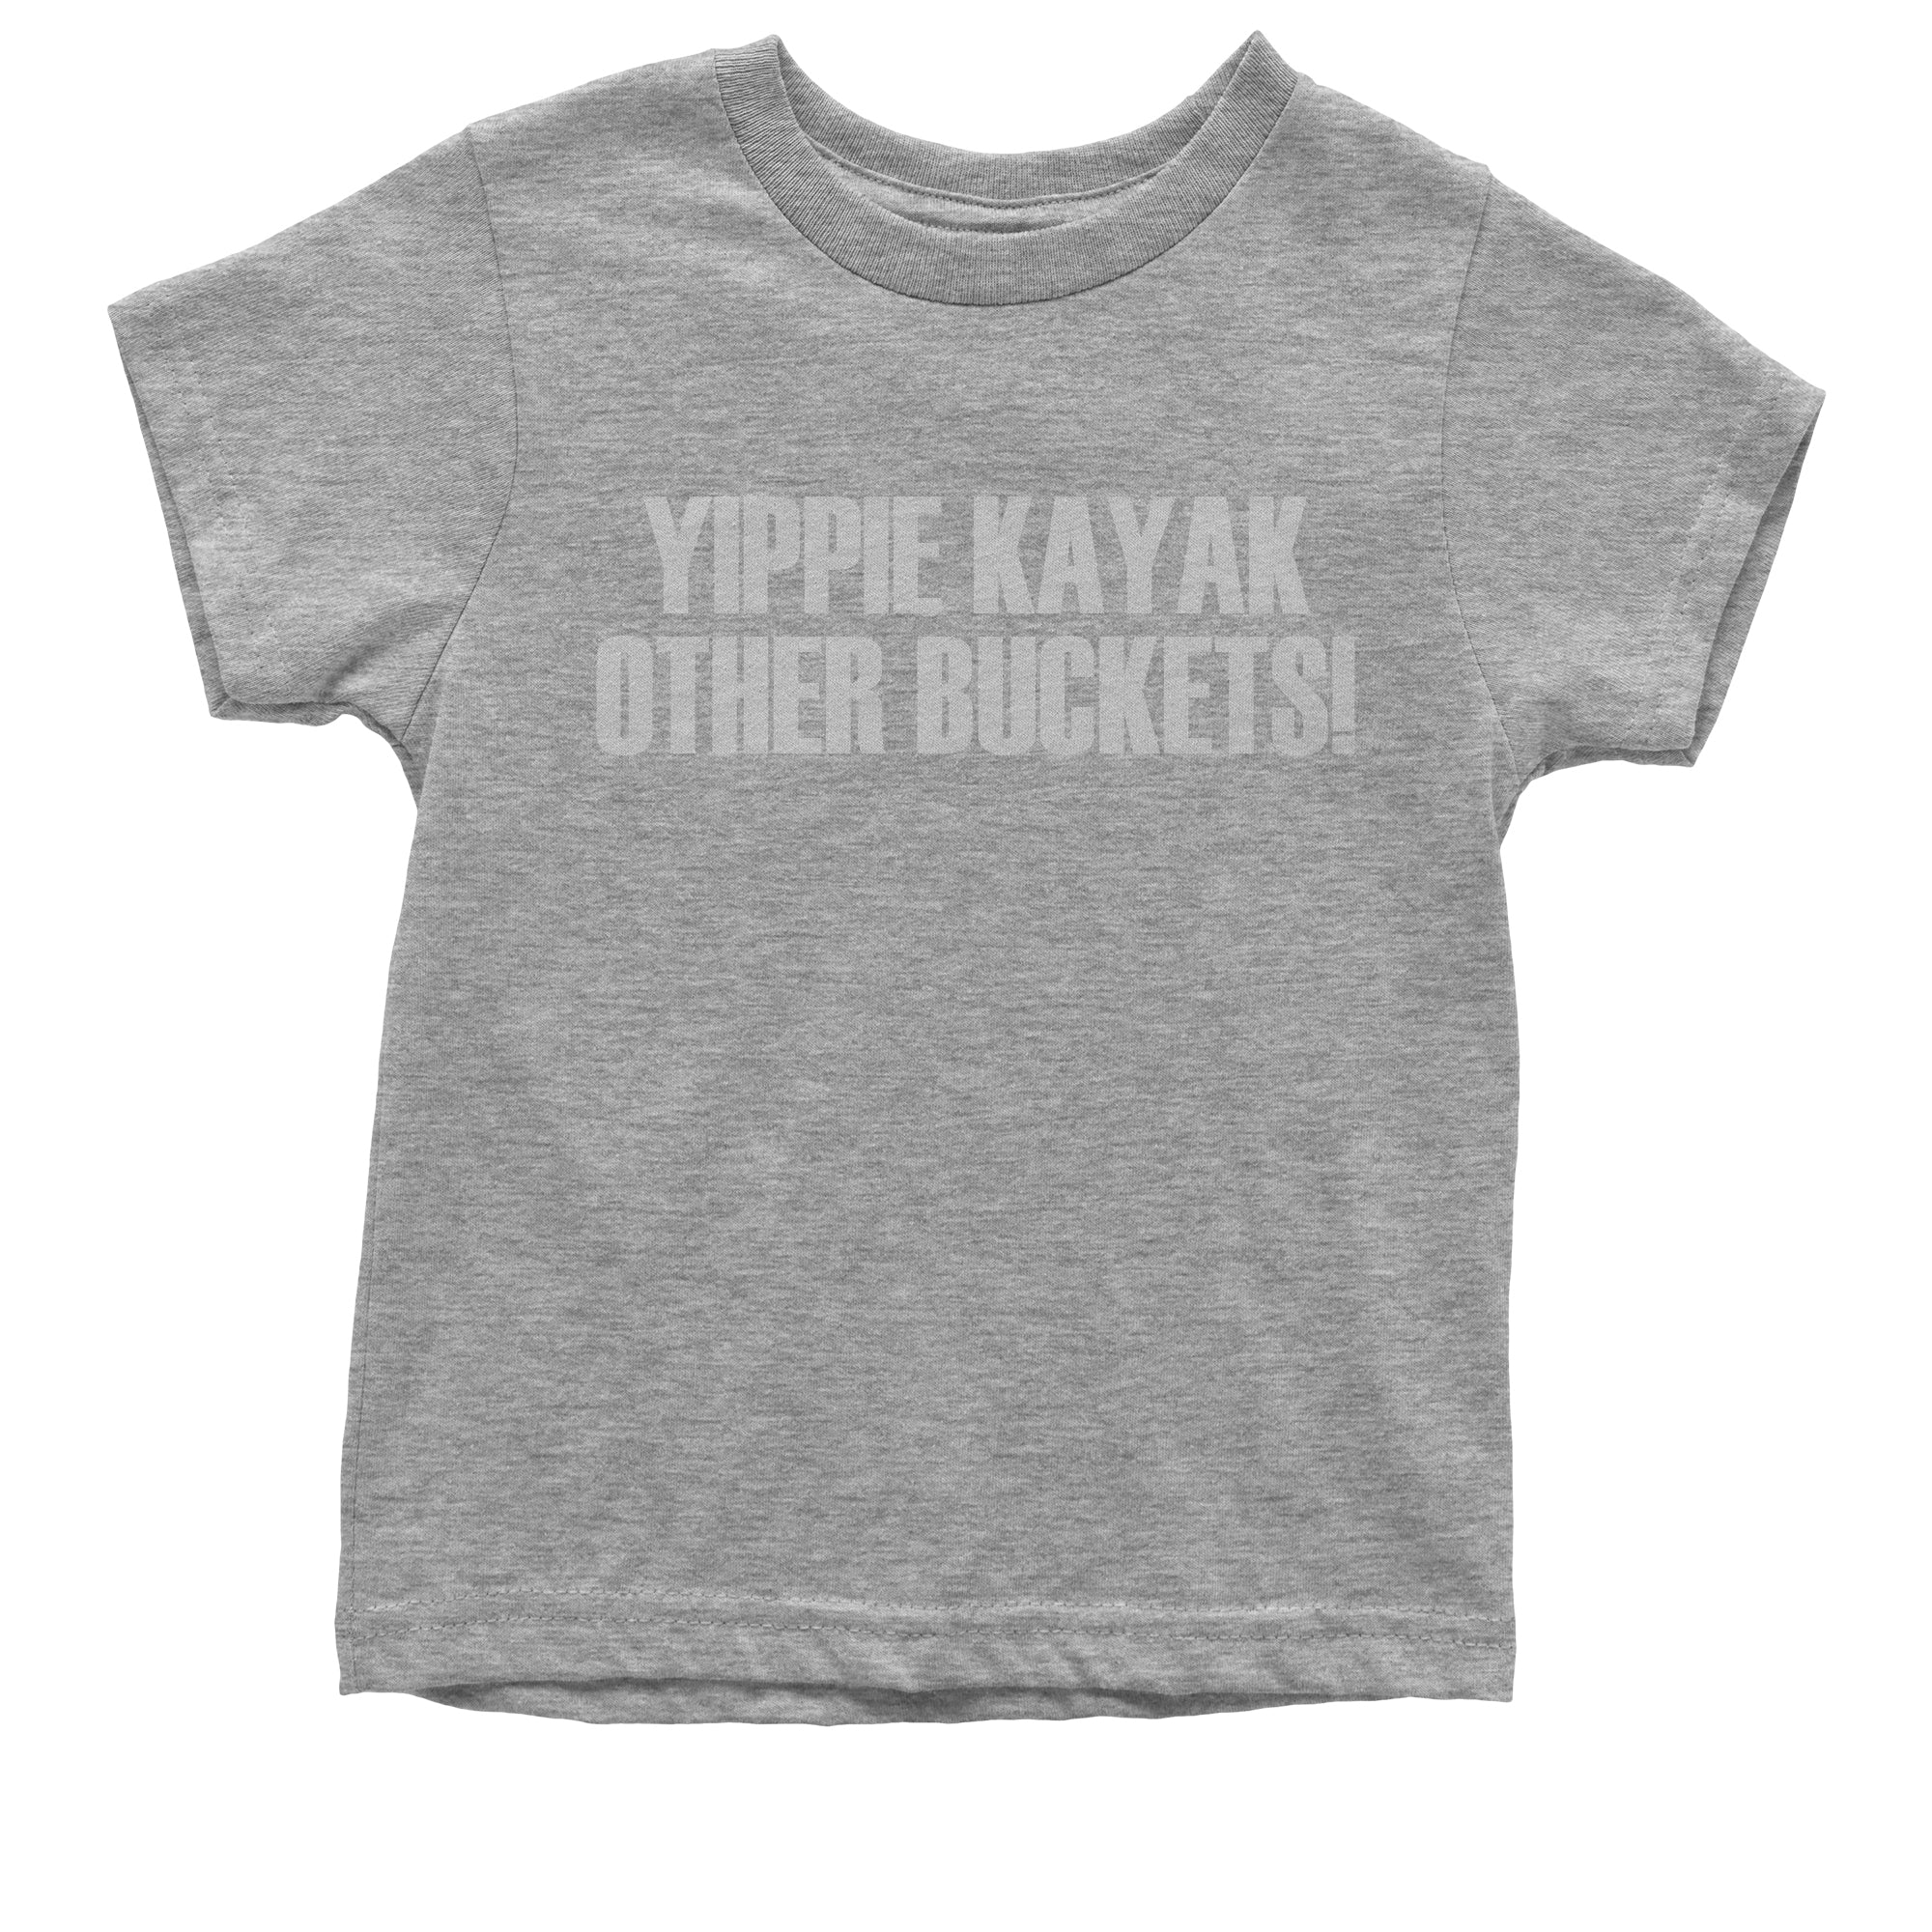 Yippie Kayak Other Buckets Brooklyn 99 Kid's T-Shirt